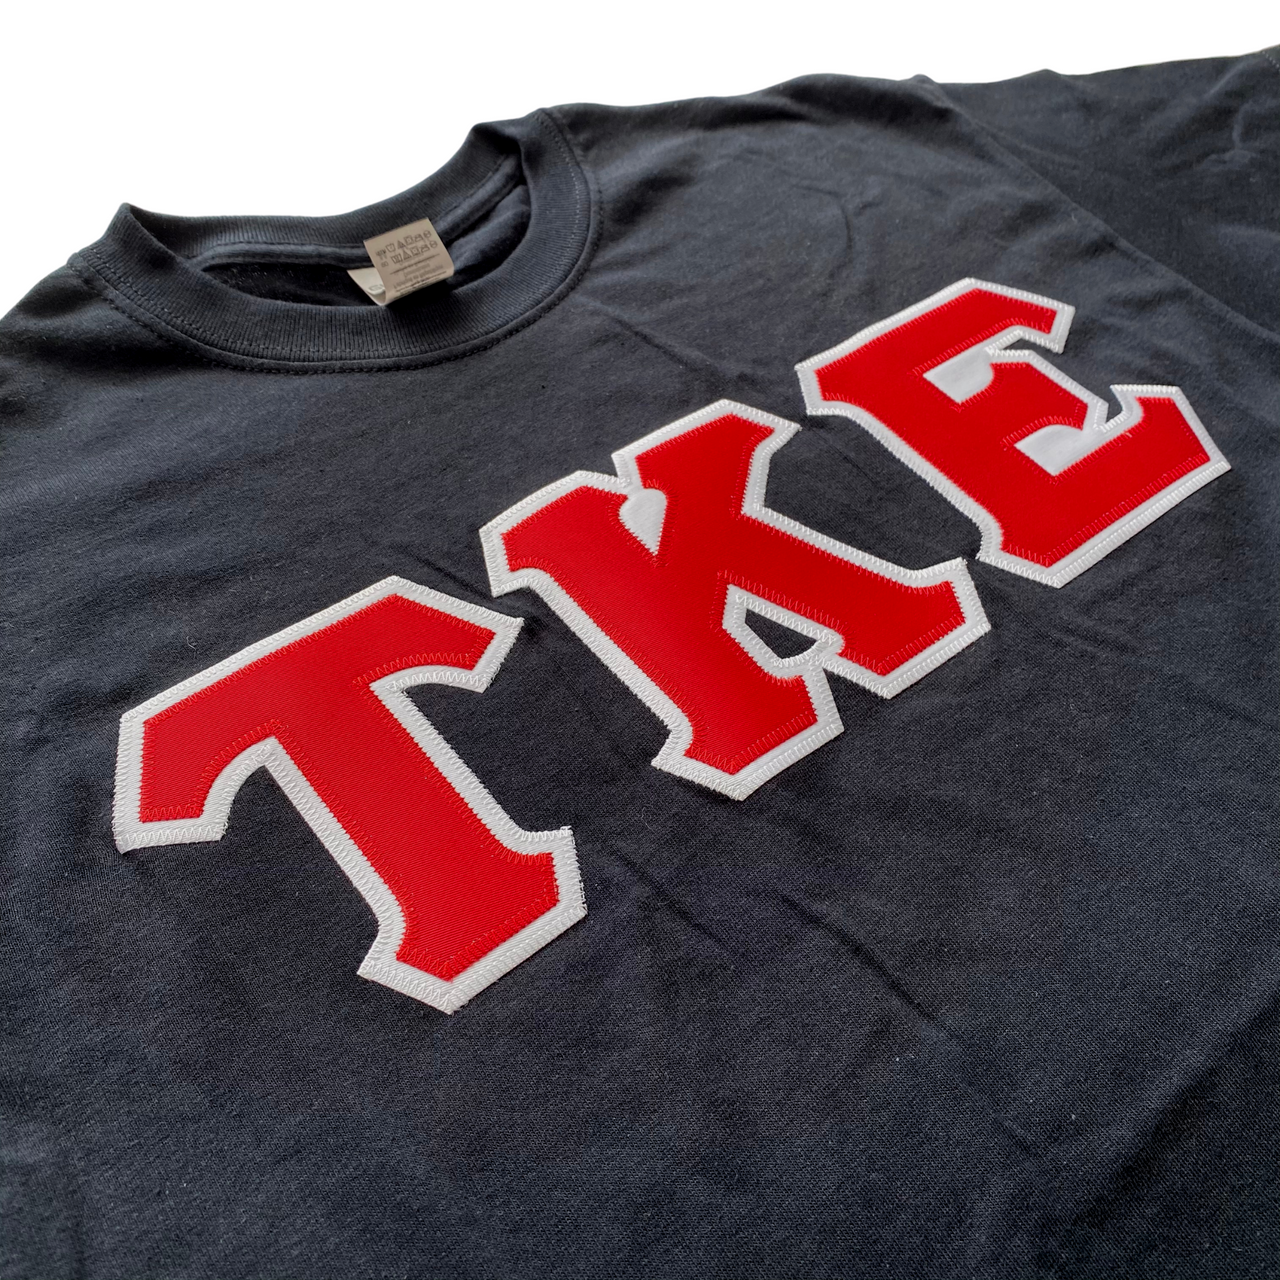 Tau Kappa Epsilon Stitched Letter T-Shirt | Black | Red with White Border